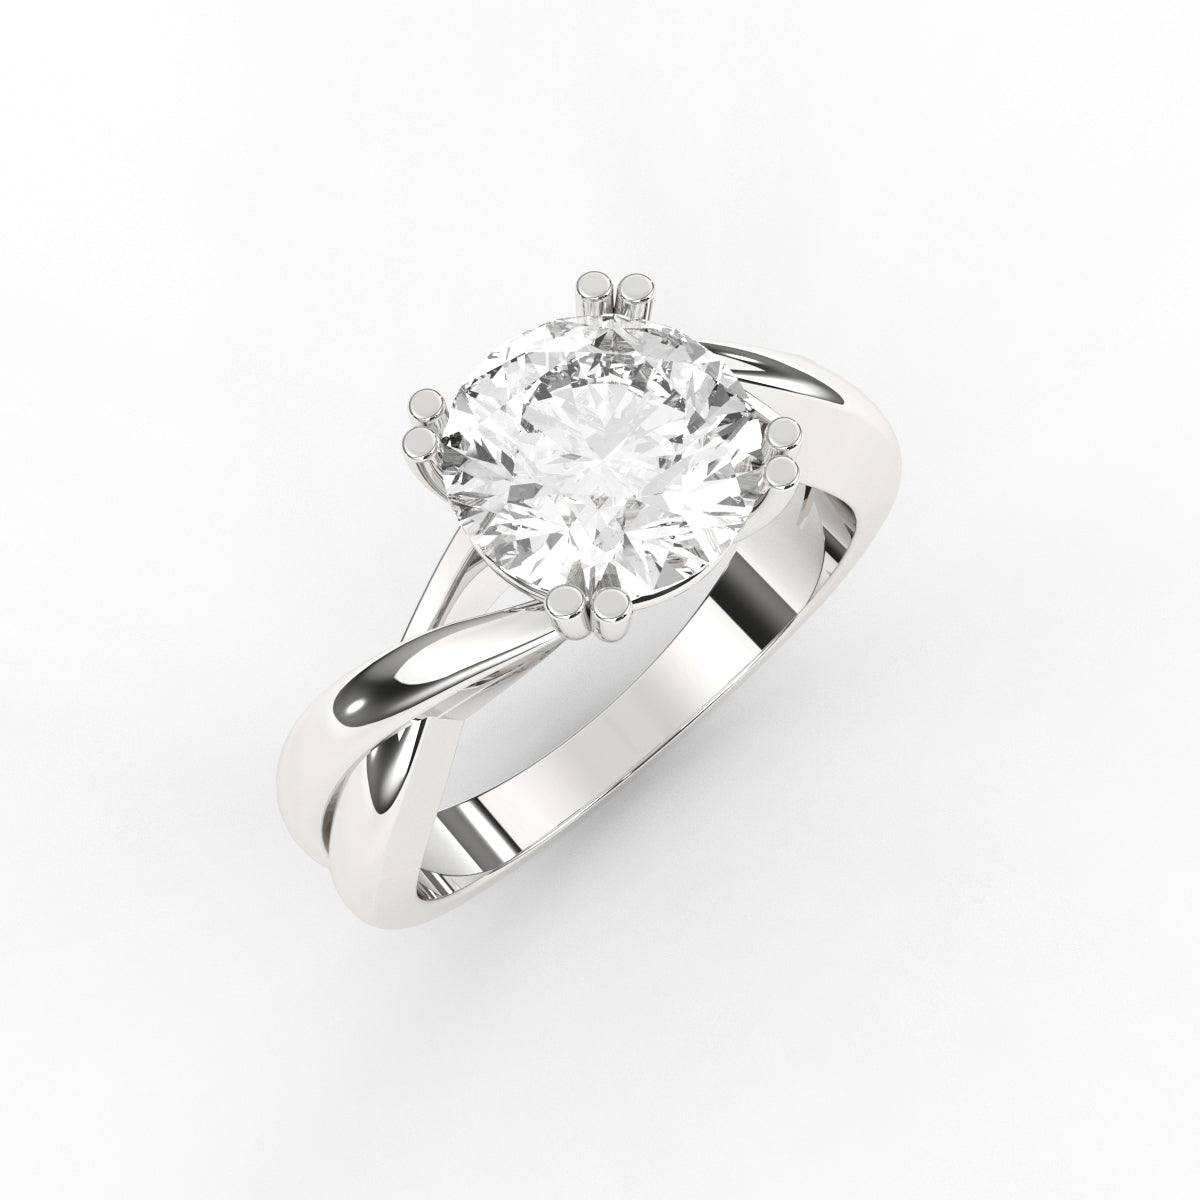 Double Prongs Solitare Diamond Ring